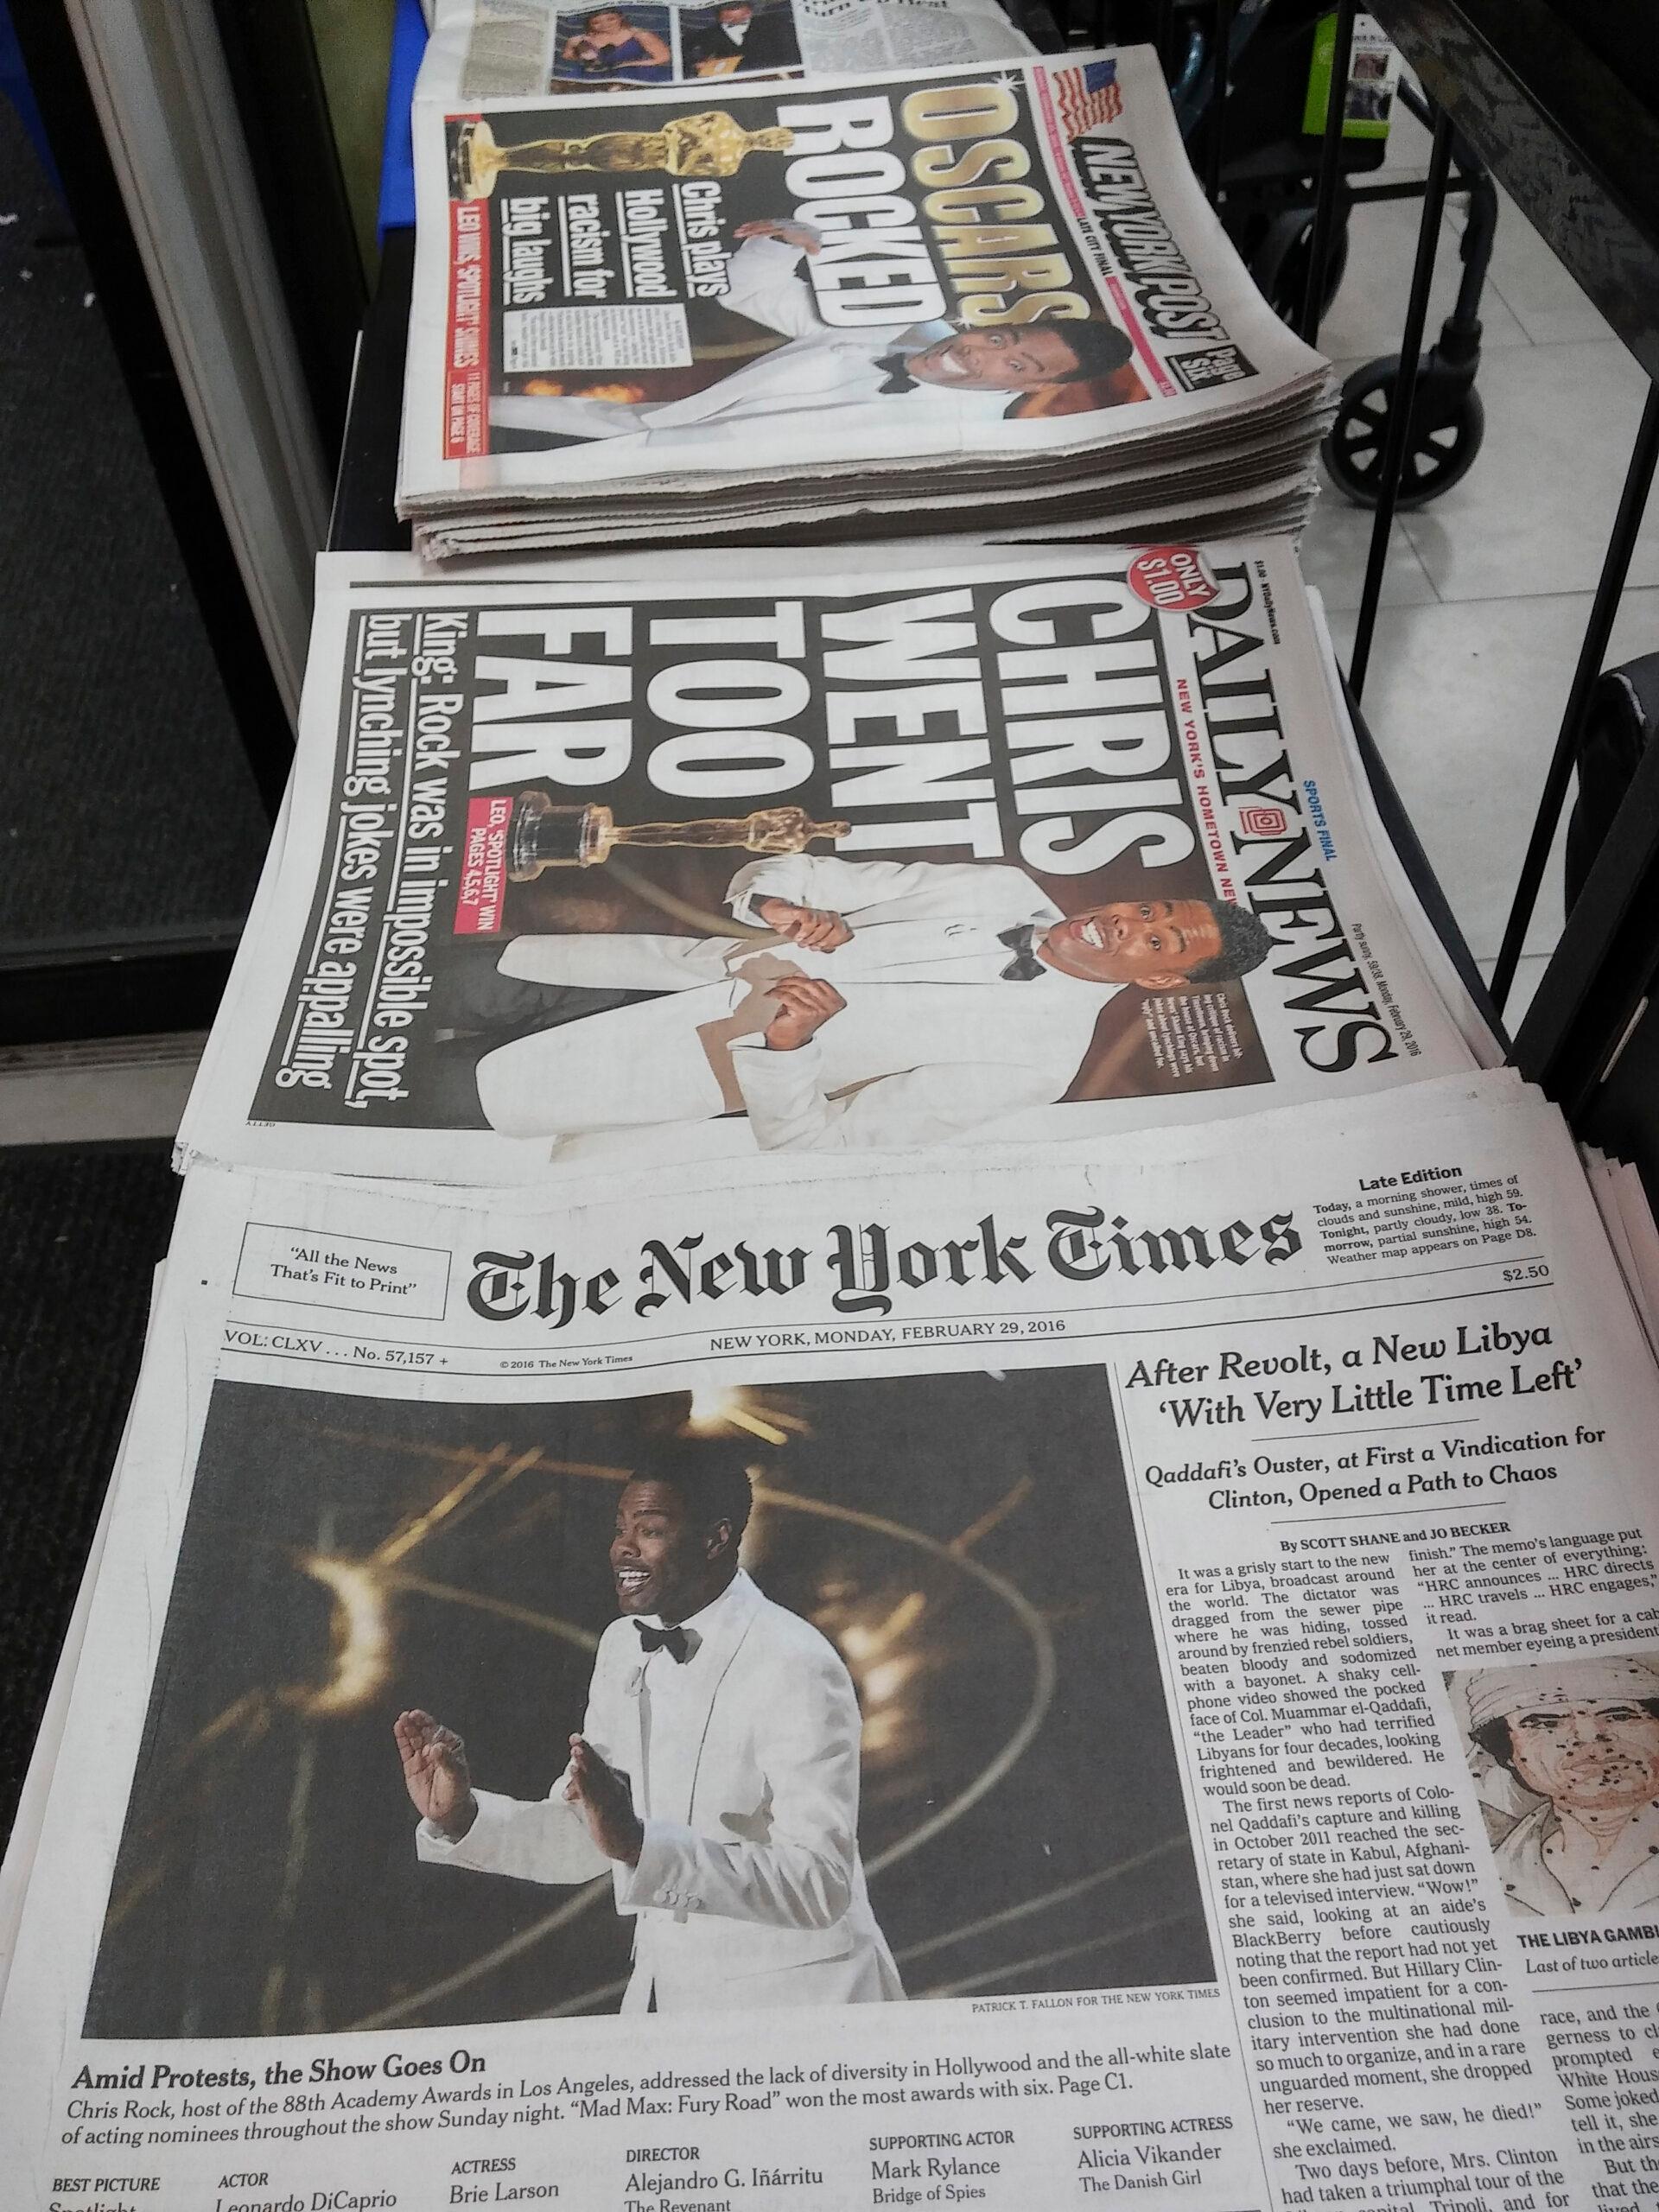 New York newspapers report on Oscars